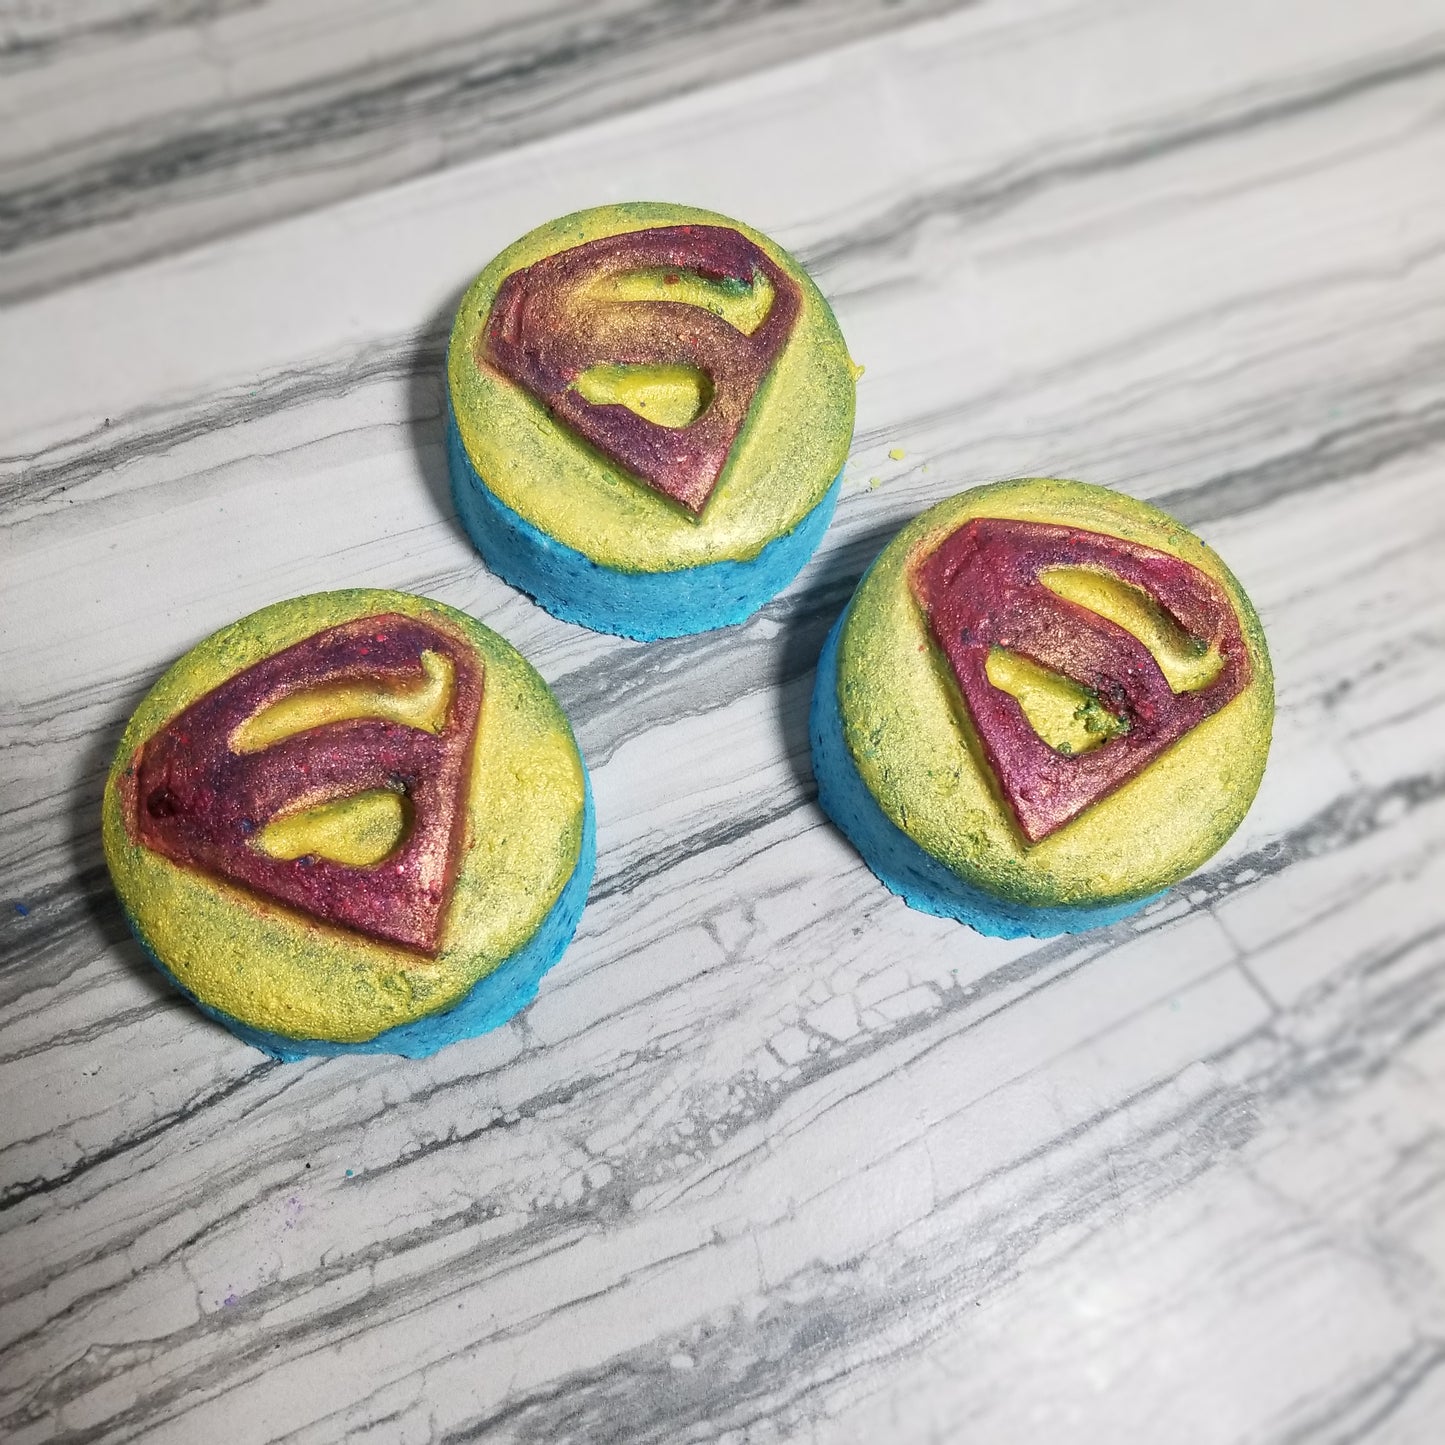 Superhero pucks